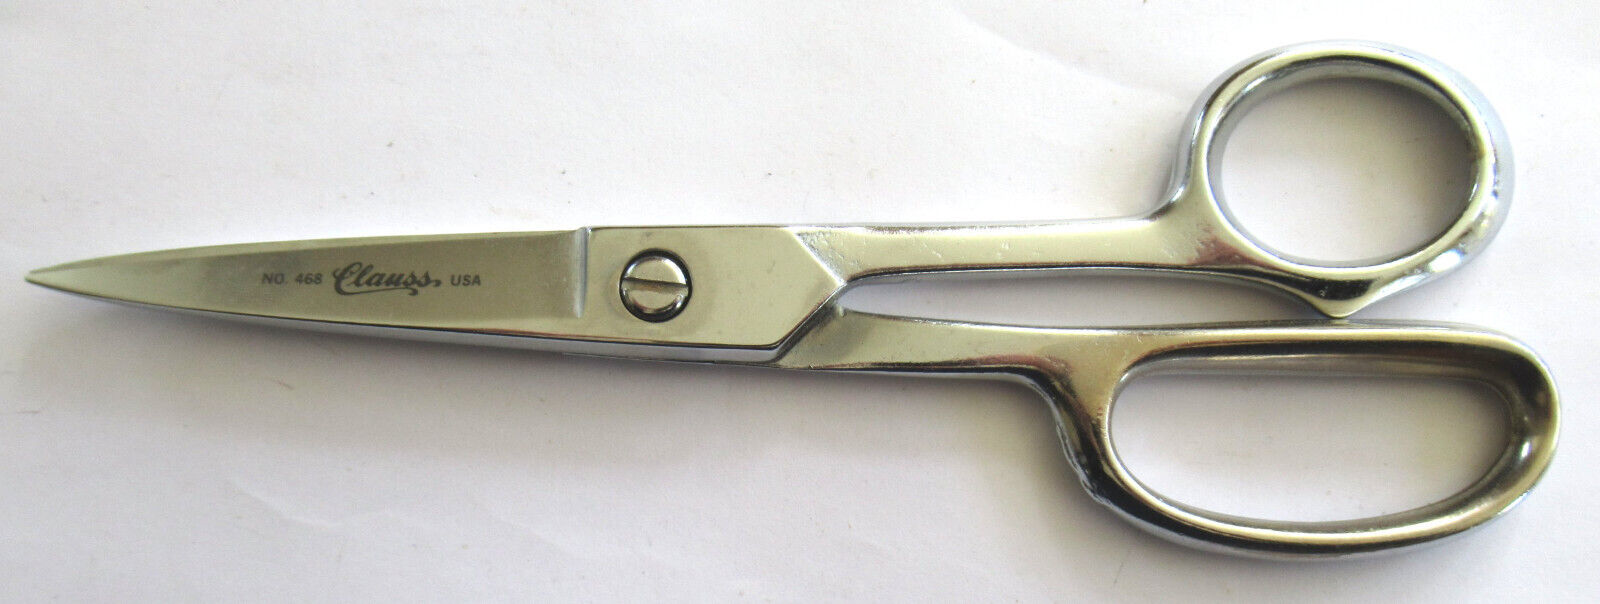 Vintage Clauss NO. 468 Scissors USA